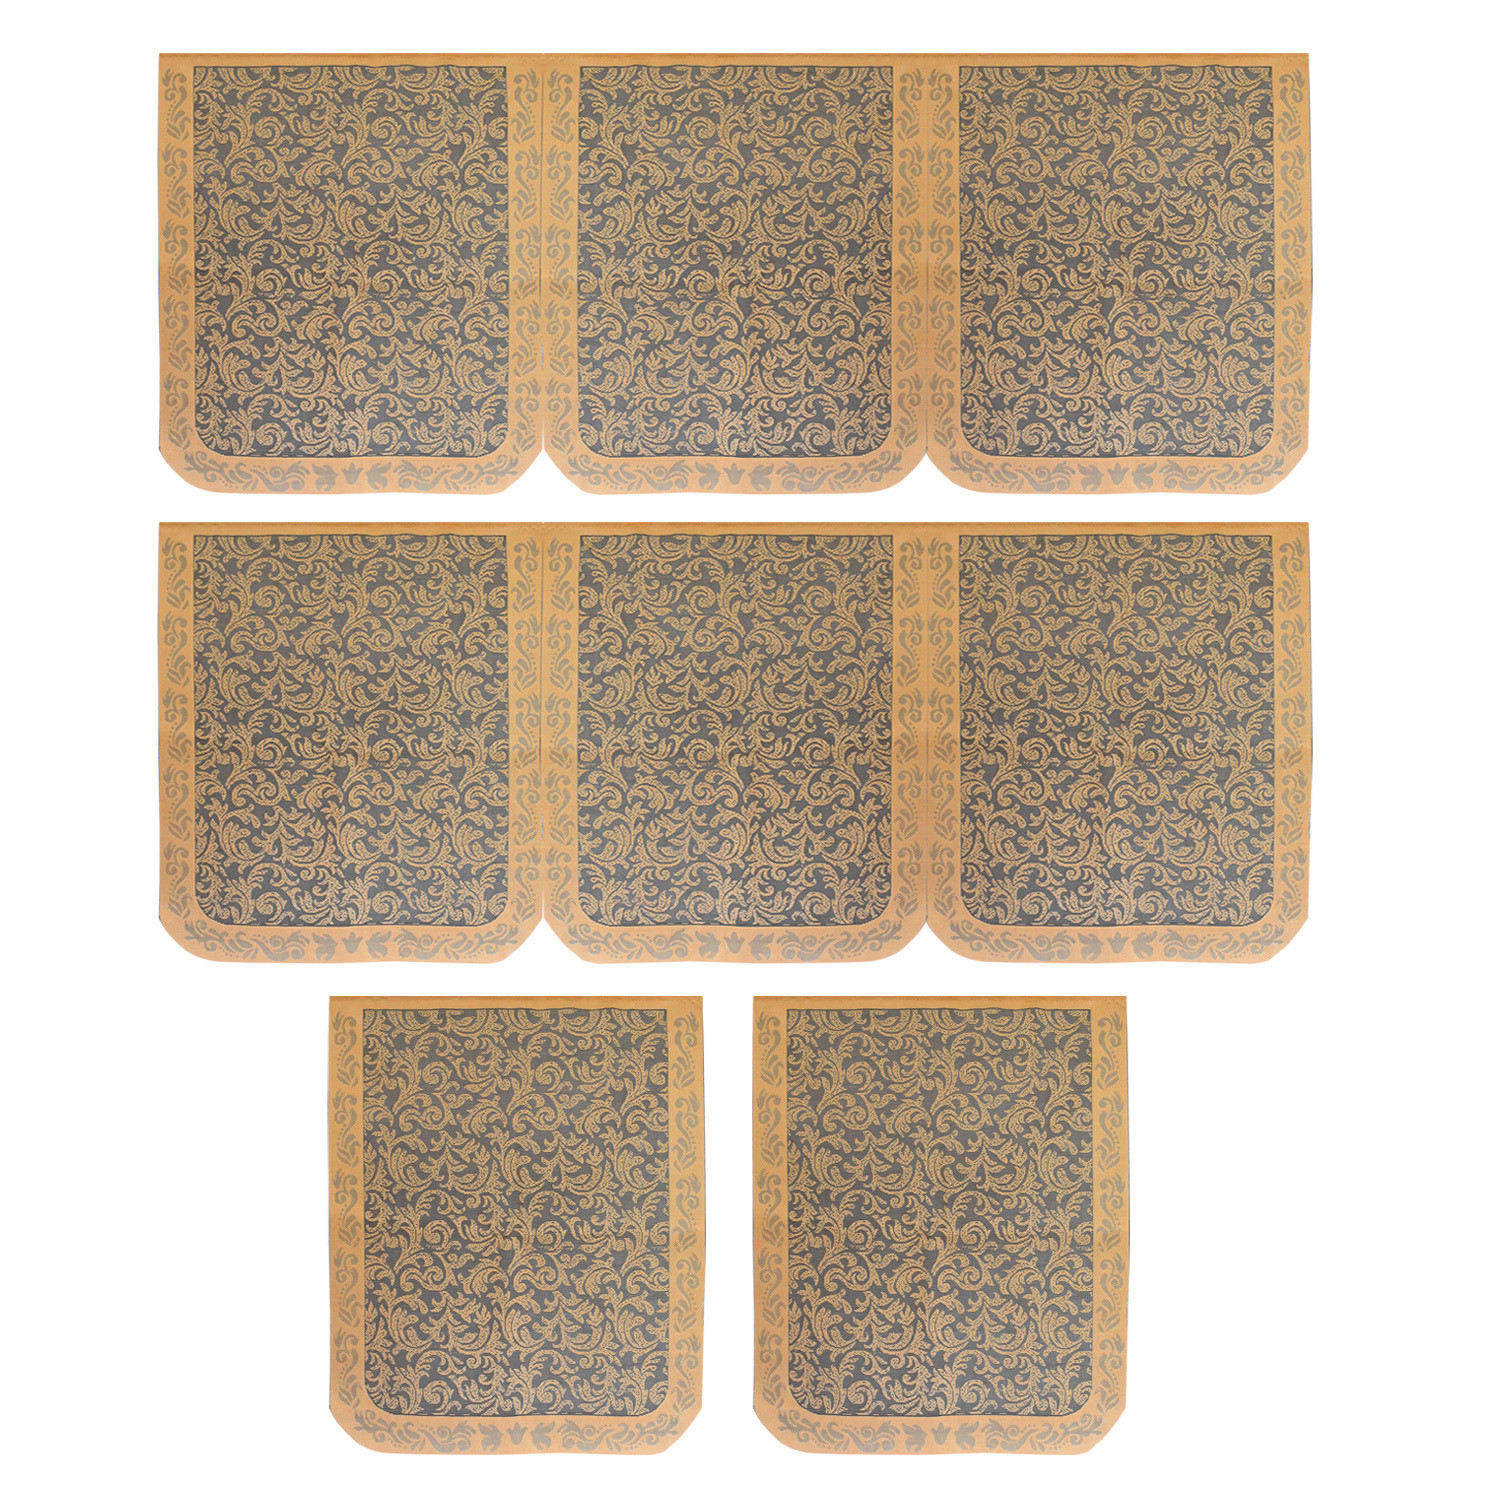 Kuber Industries Leaf Design 5 Seater Cotton Sofa Cover Set (Golden)